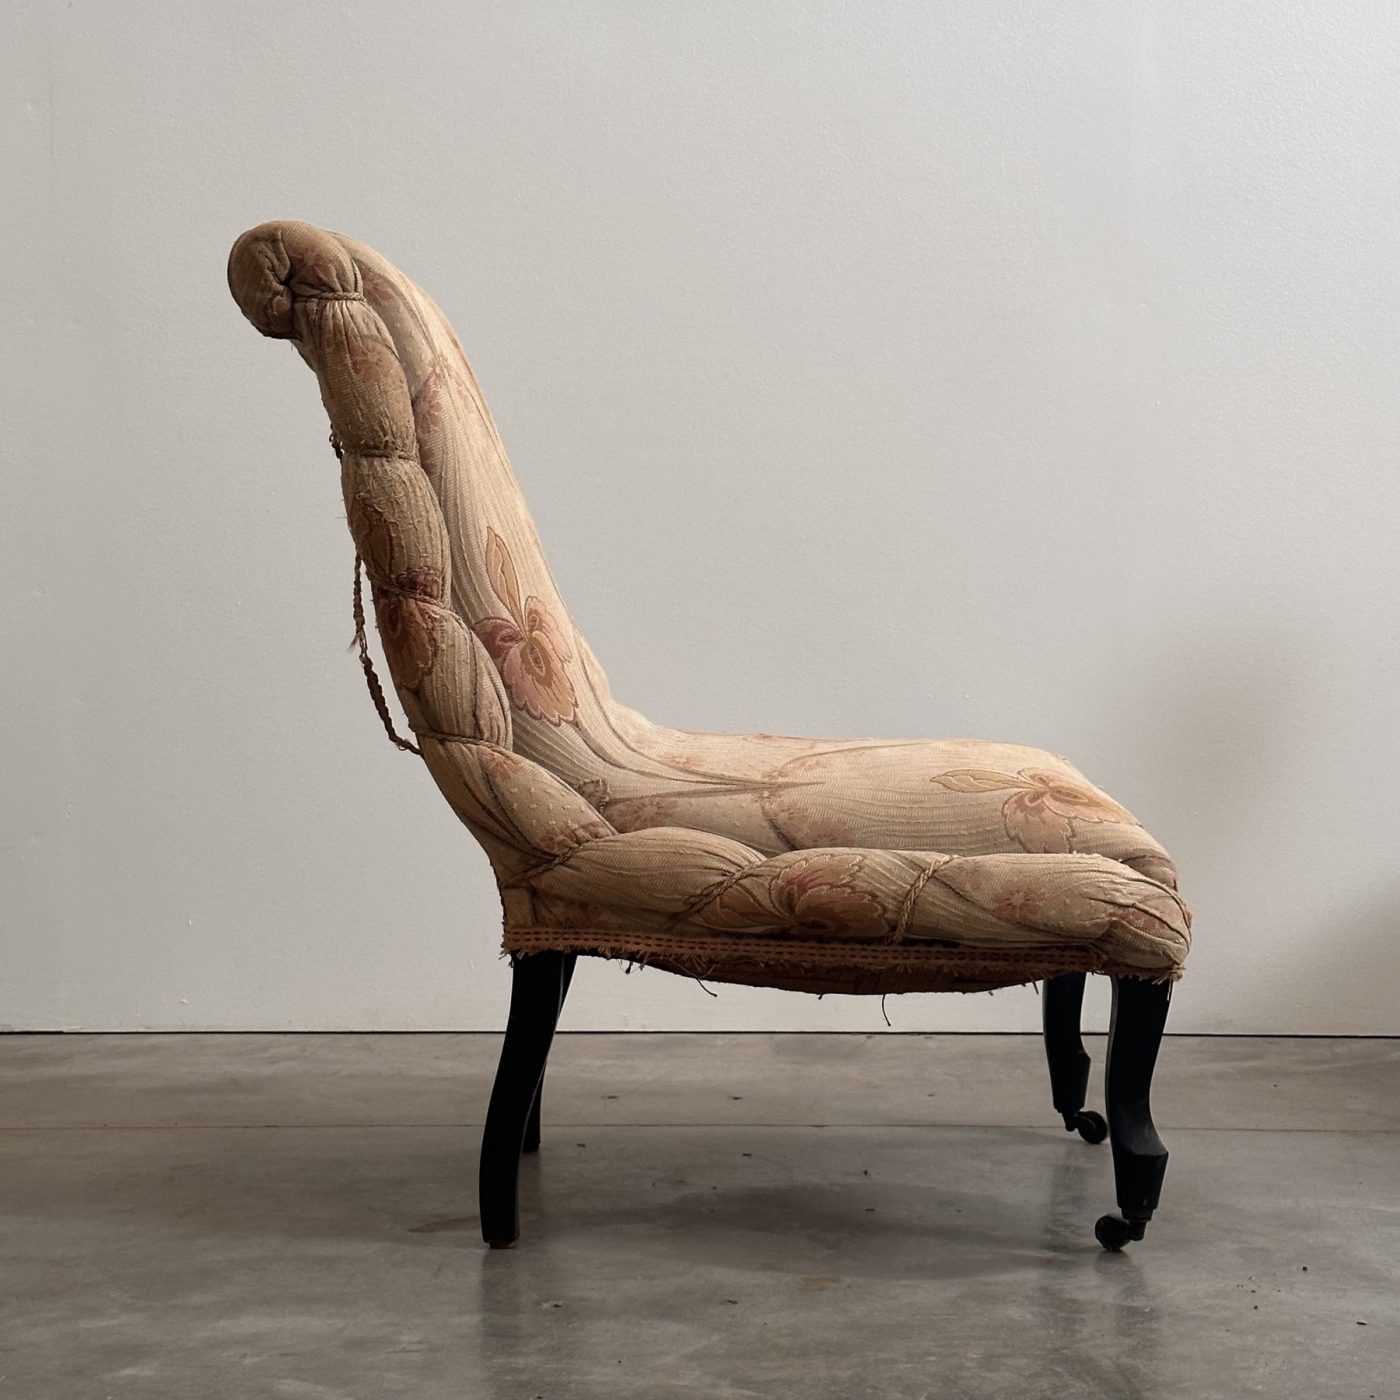 objet-vagabond-napoleon3-chair0000